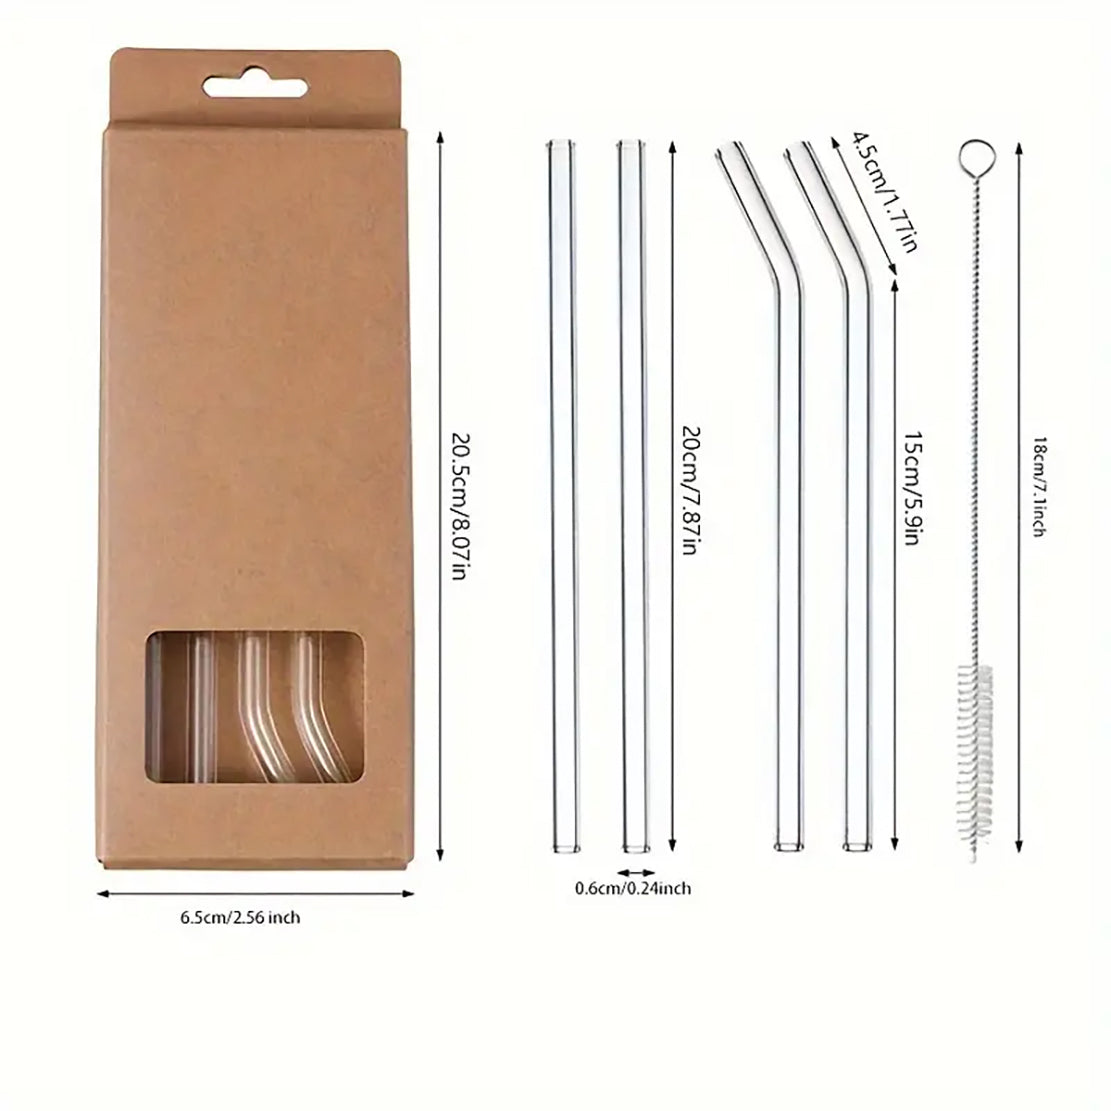 5 pcs/Set (4 Straws +1 Brush) High Borosilicate Transparent Glass Straws